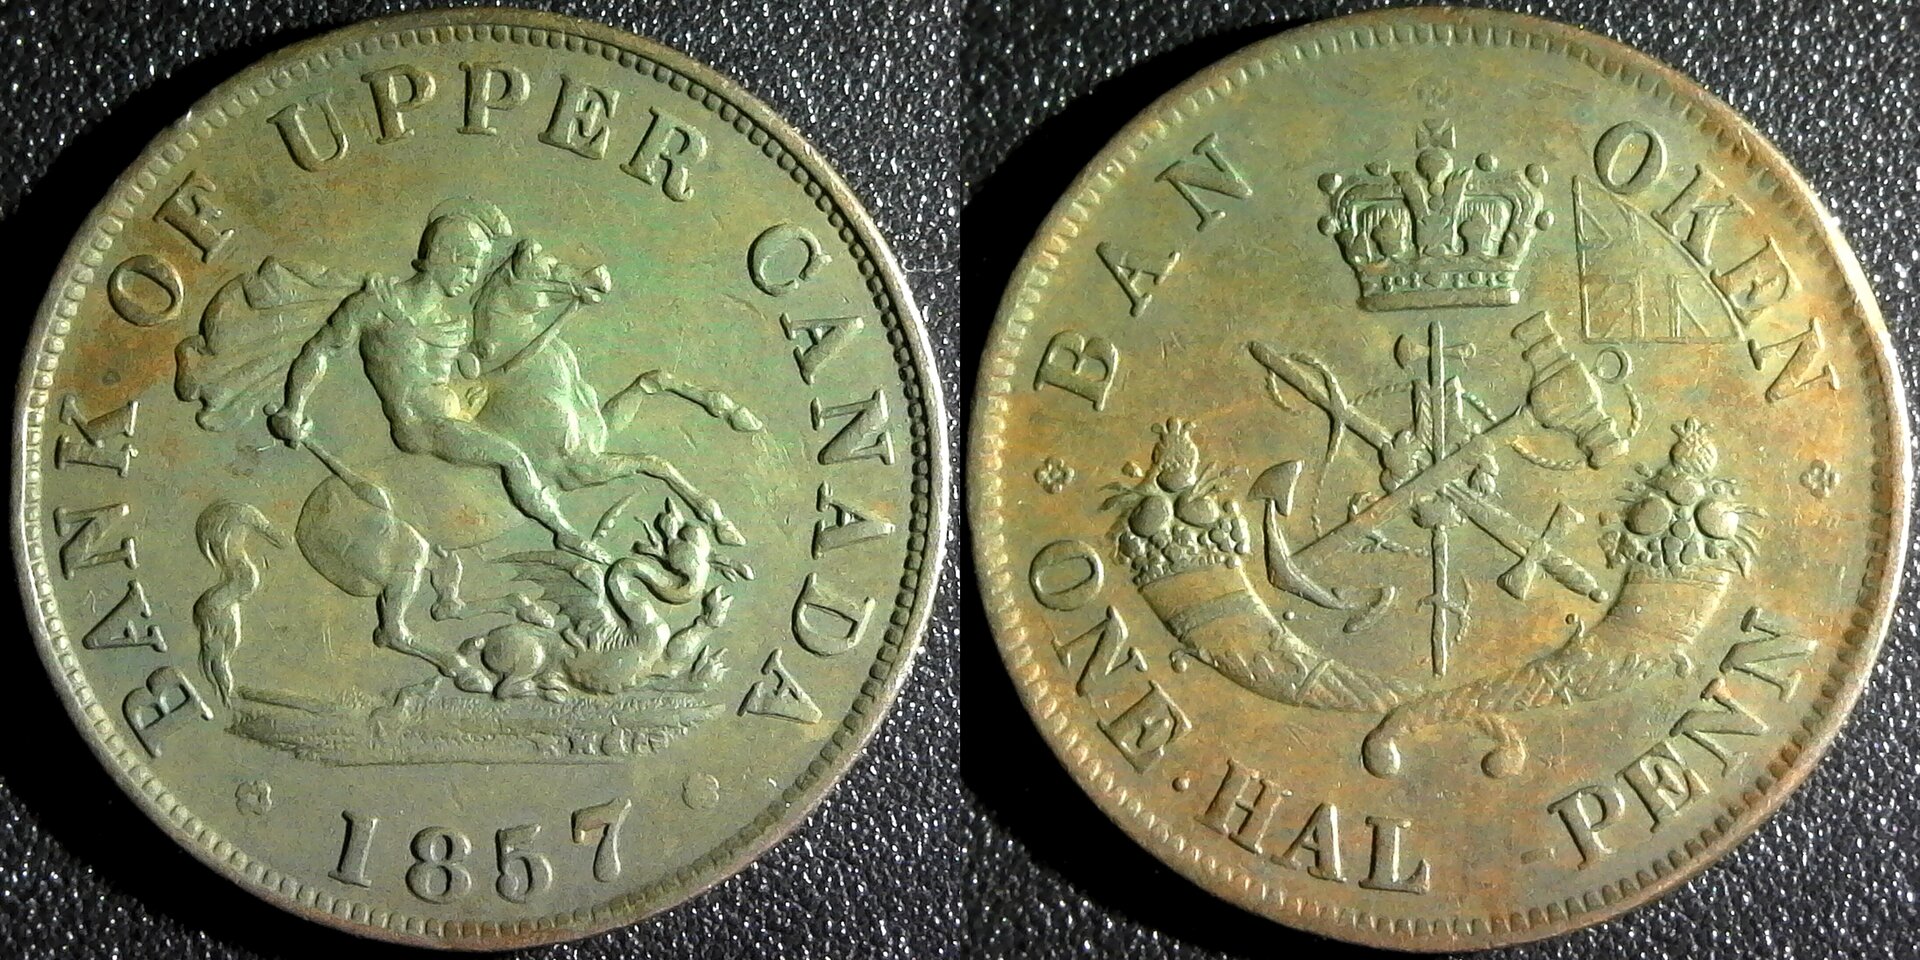 Bank of Upper Canada Half Penny Grease filled die 1857 obverse A-side.jpg